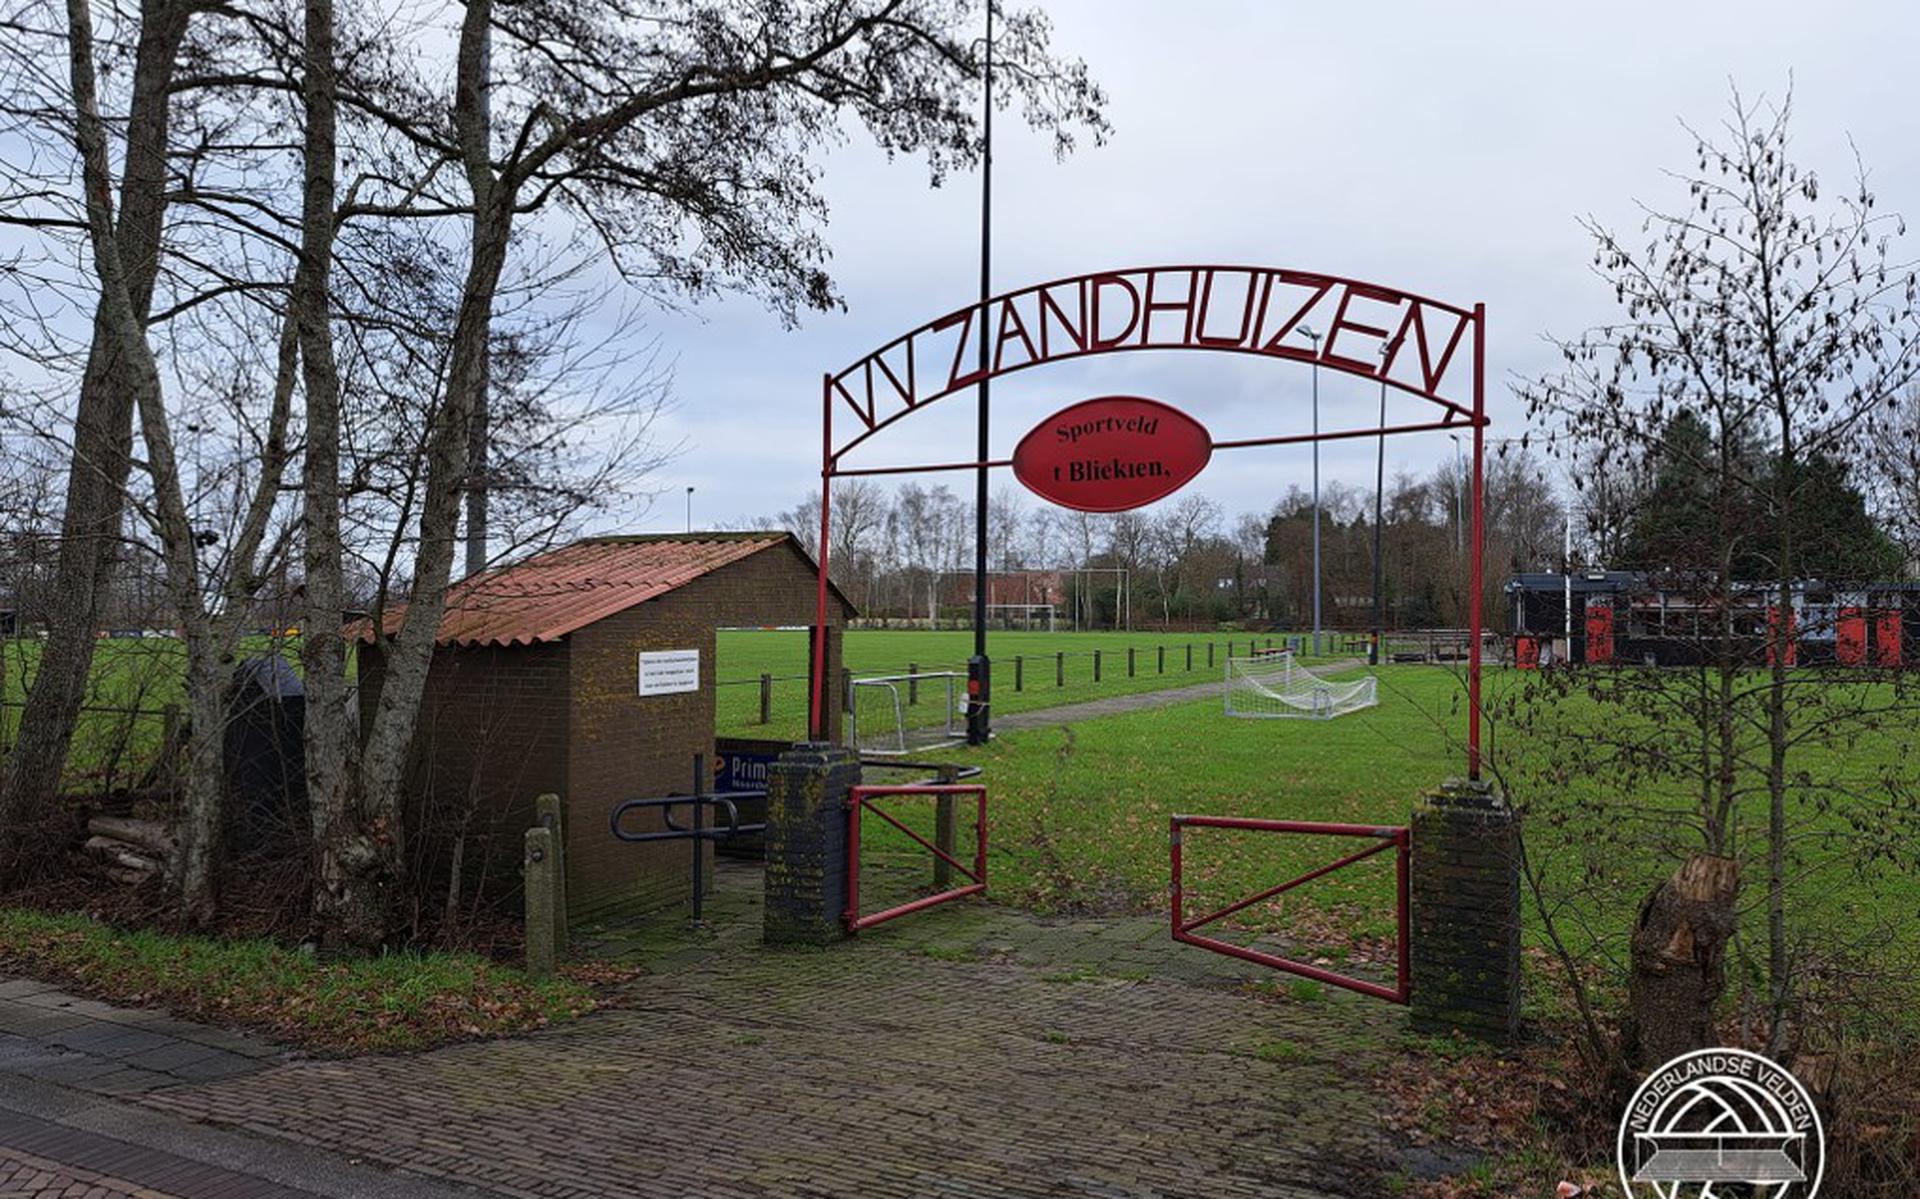 Het sportpark in Zandhuizen. Eigen foto